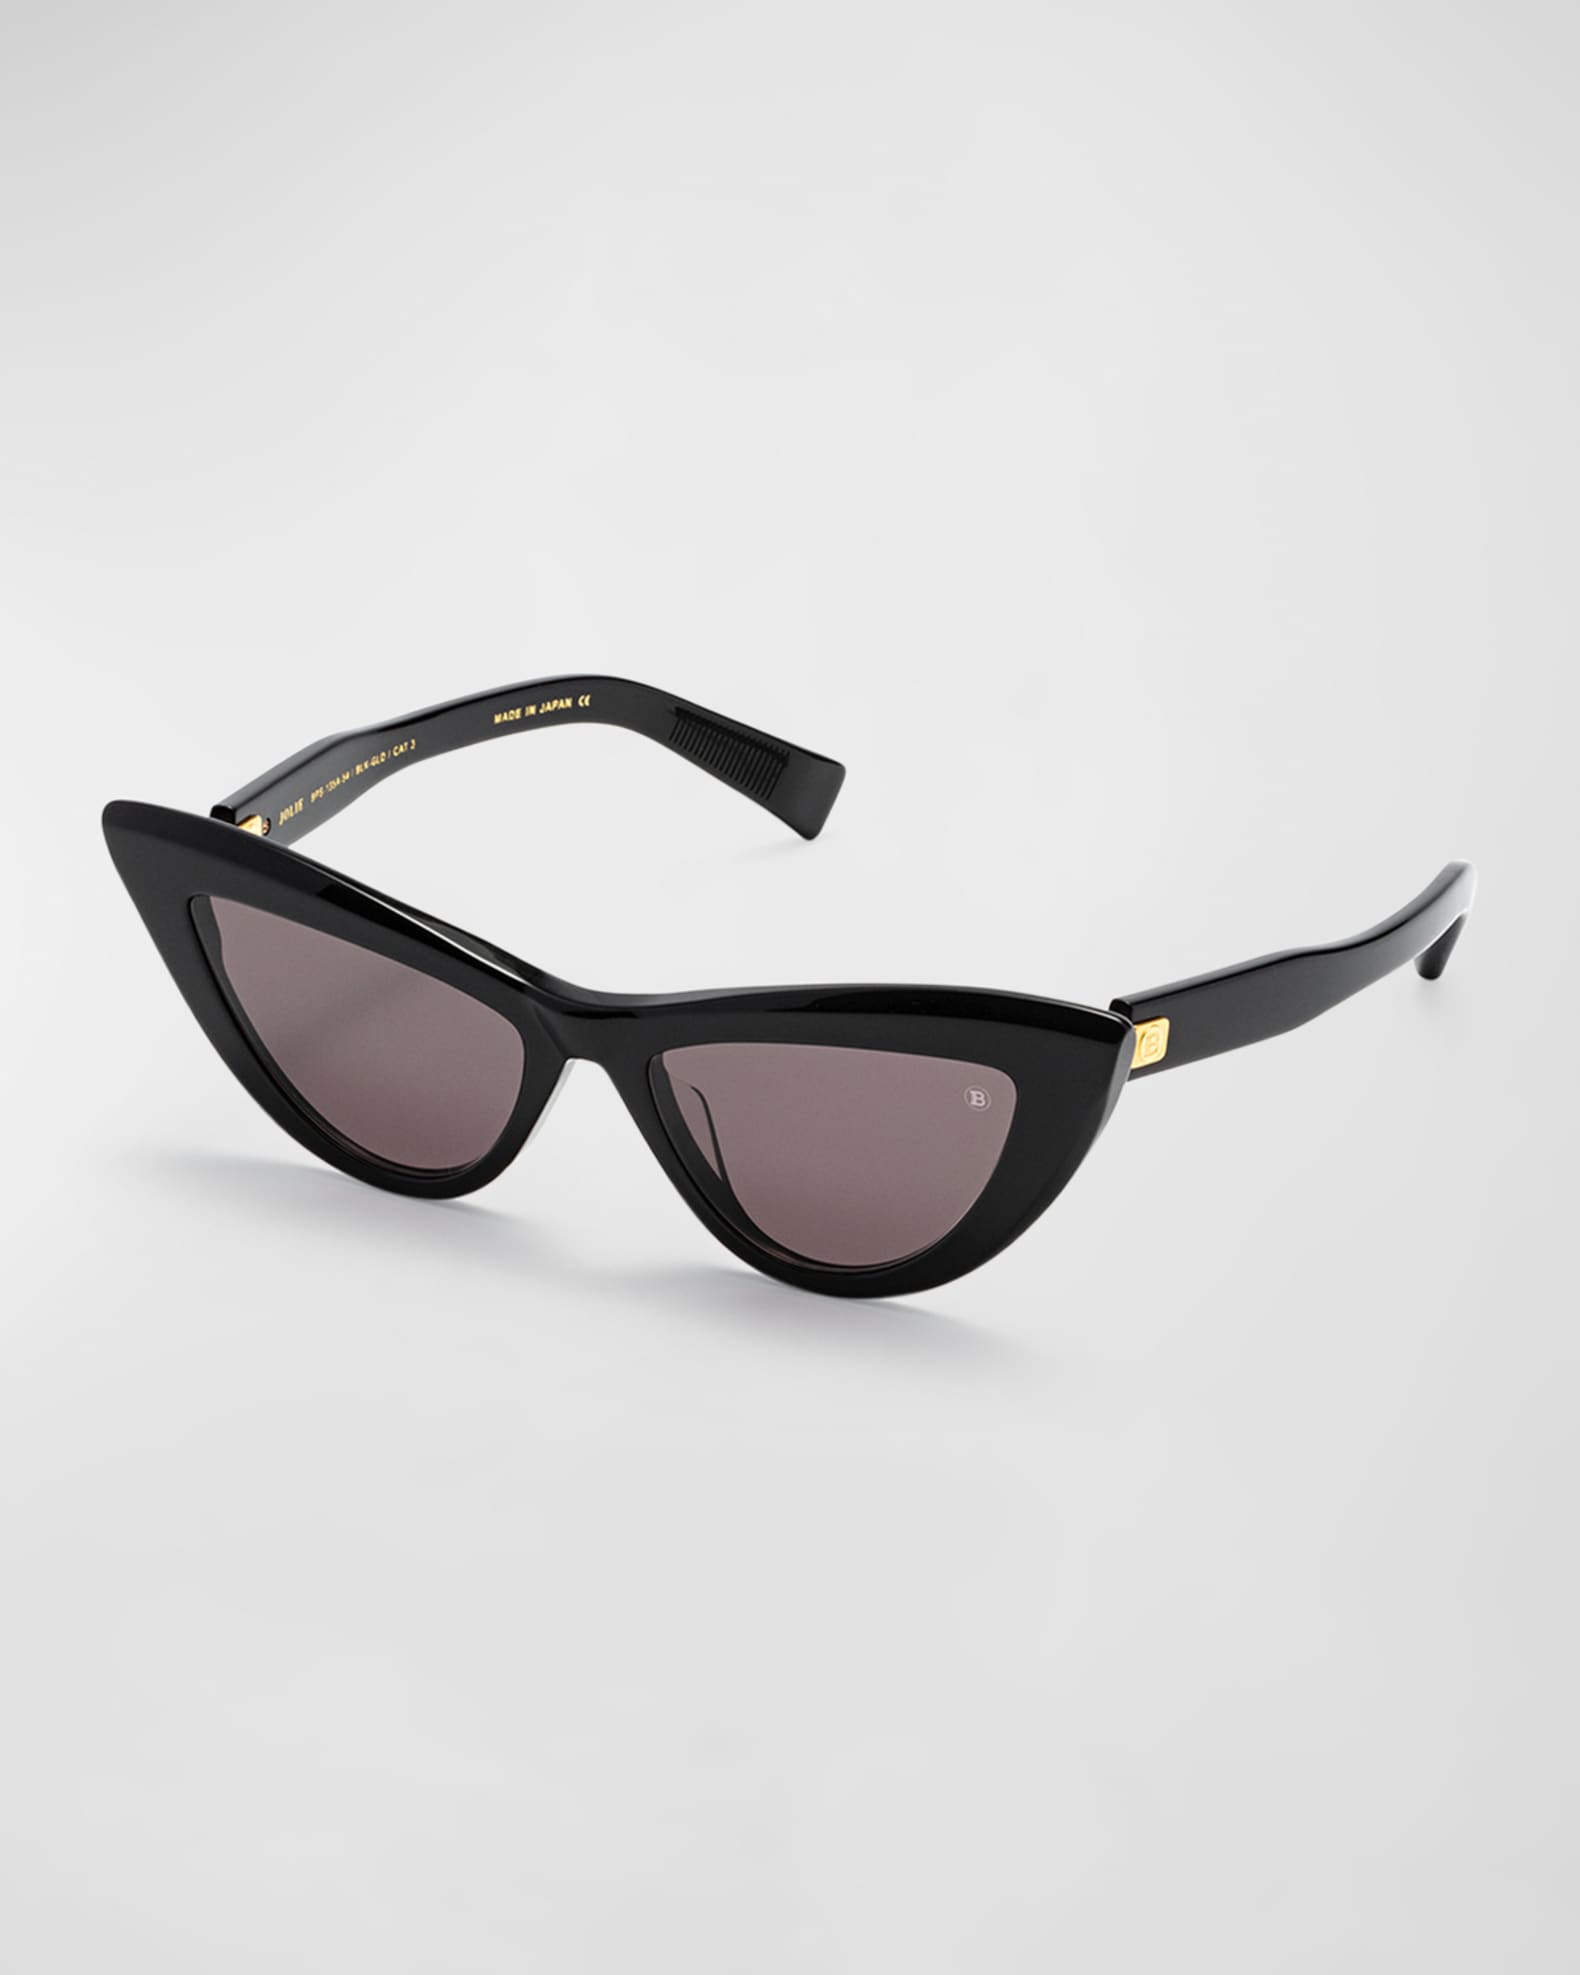 Louis Vuitton Attitude Sunglasses Gold Acetate & Metal. Size U